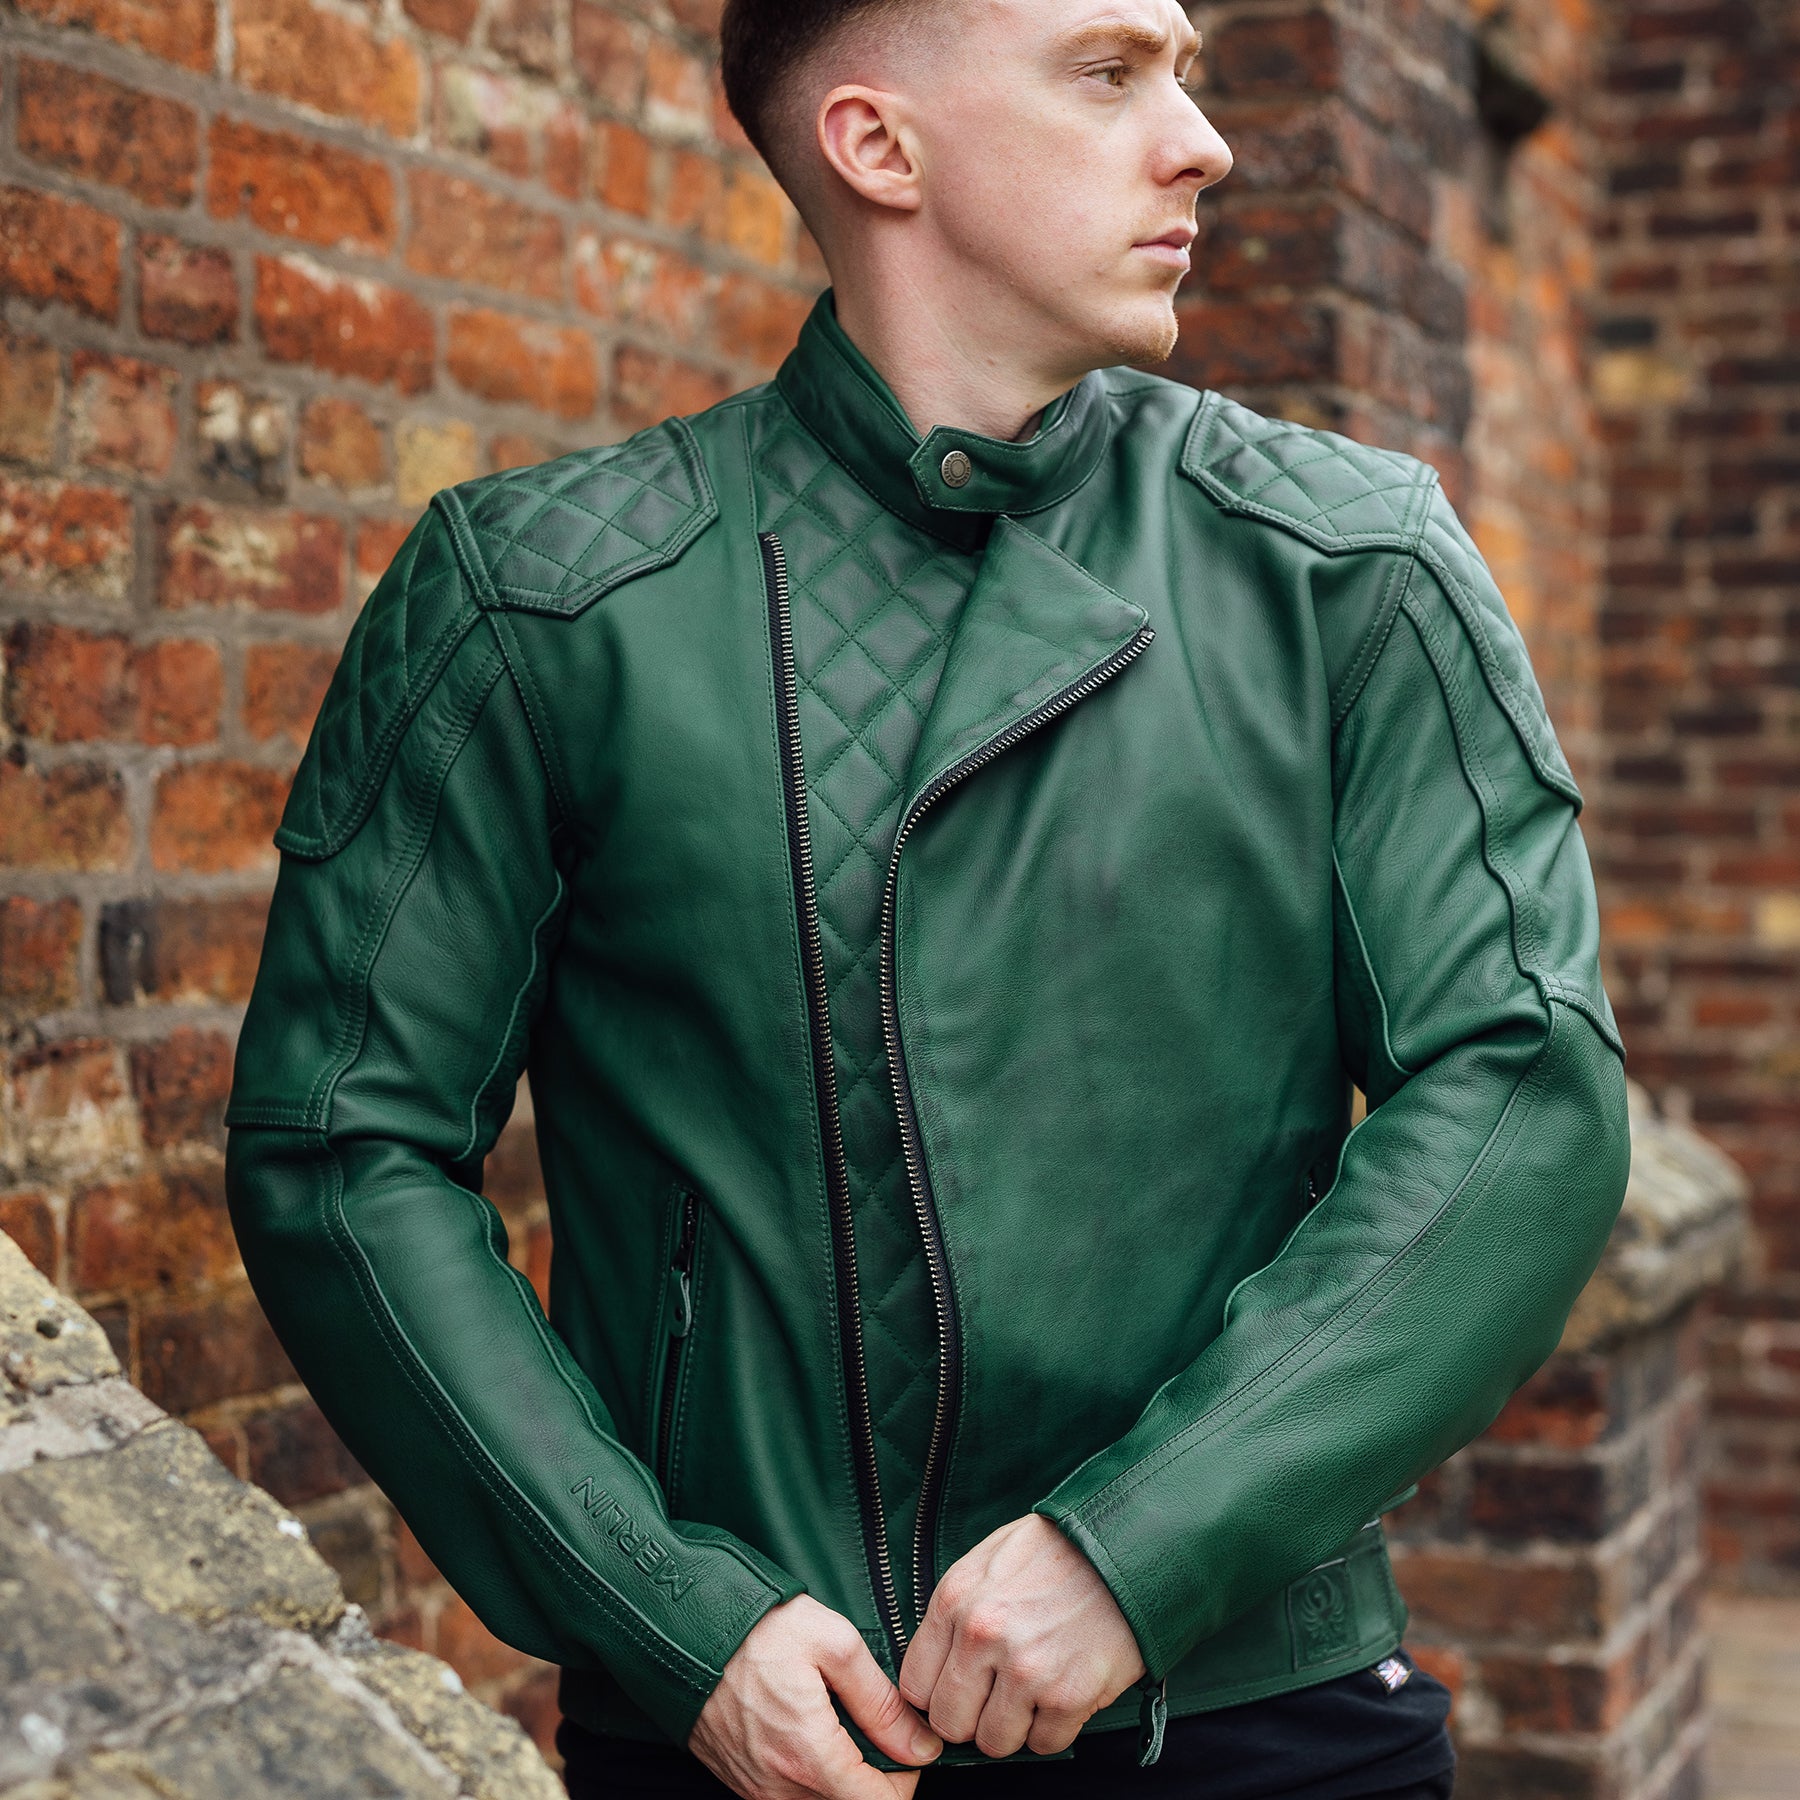 Buy Men's Green Vintage Biker Leather Jacket Online Now in USA - UK